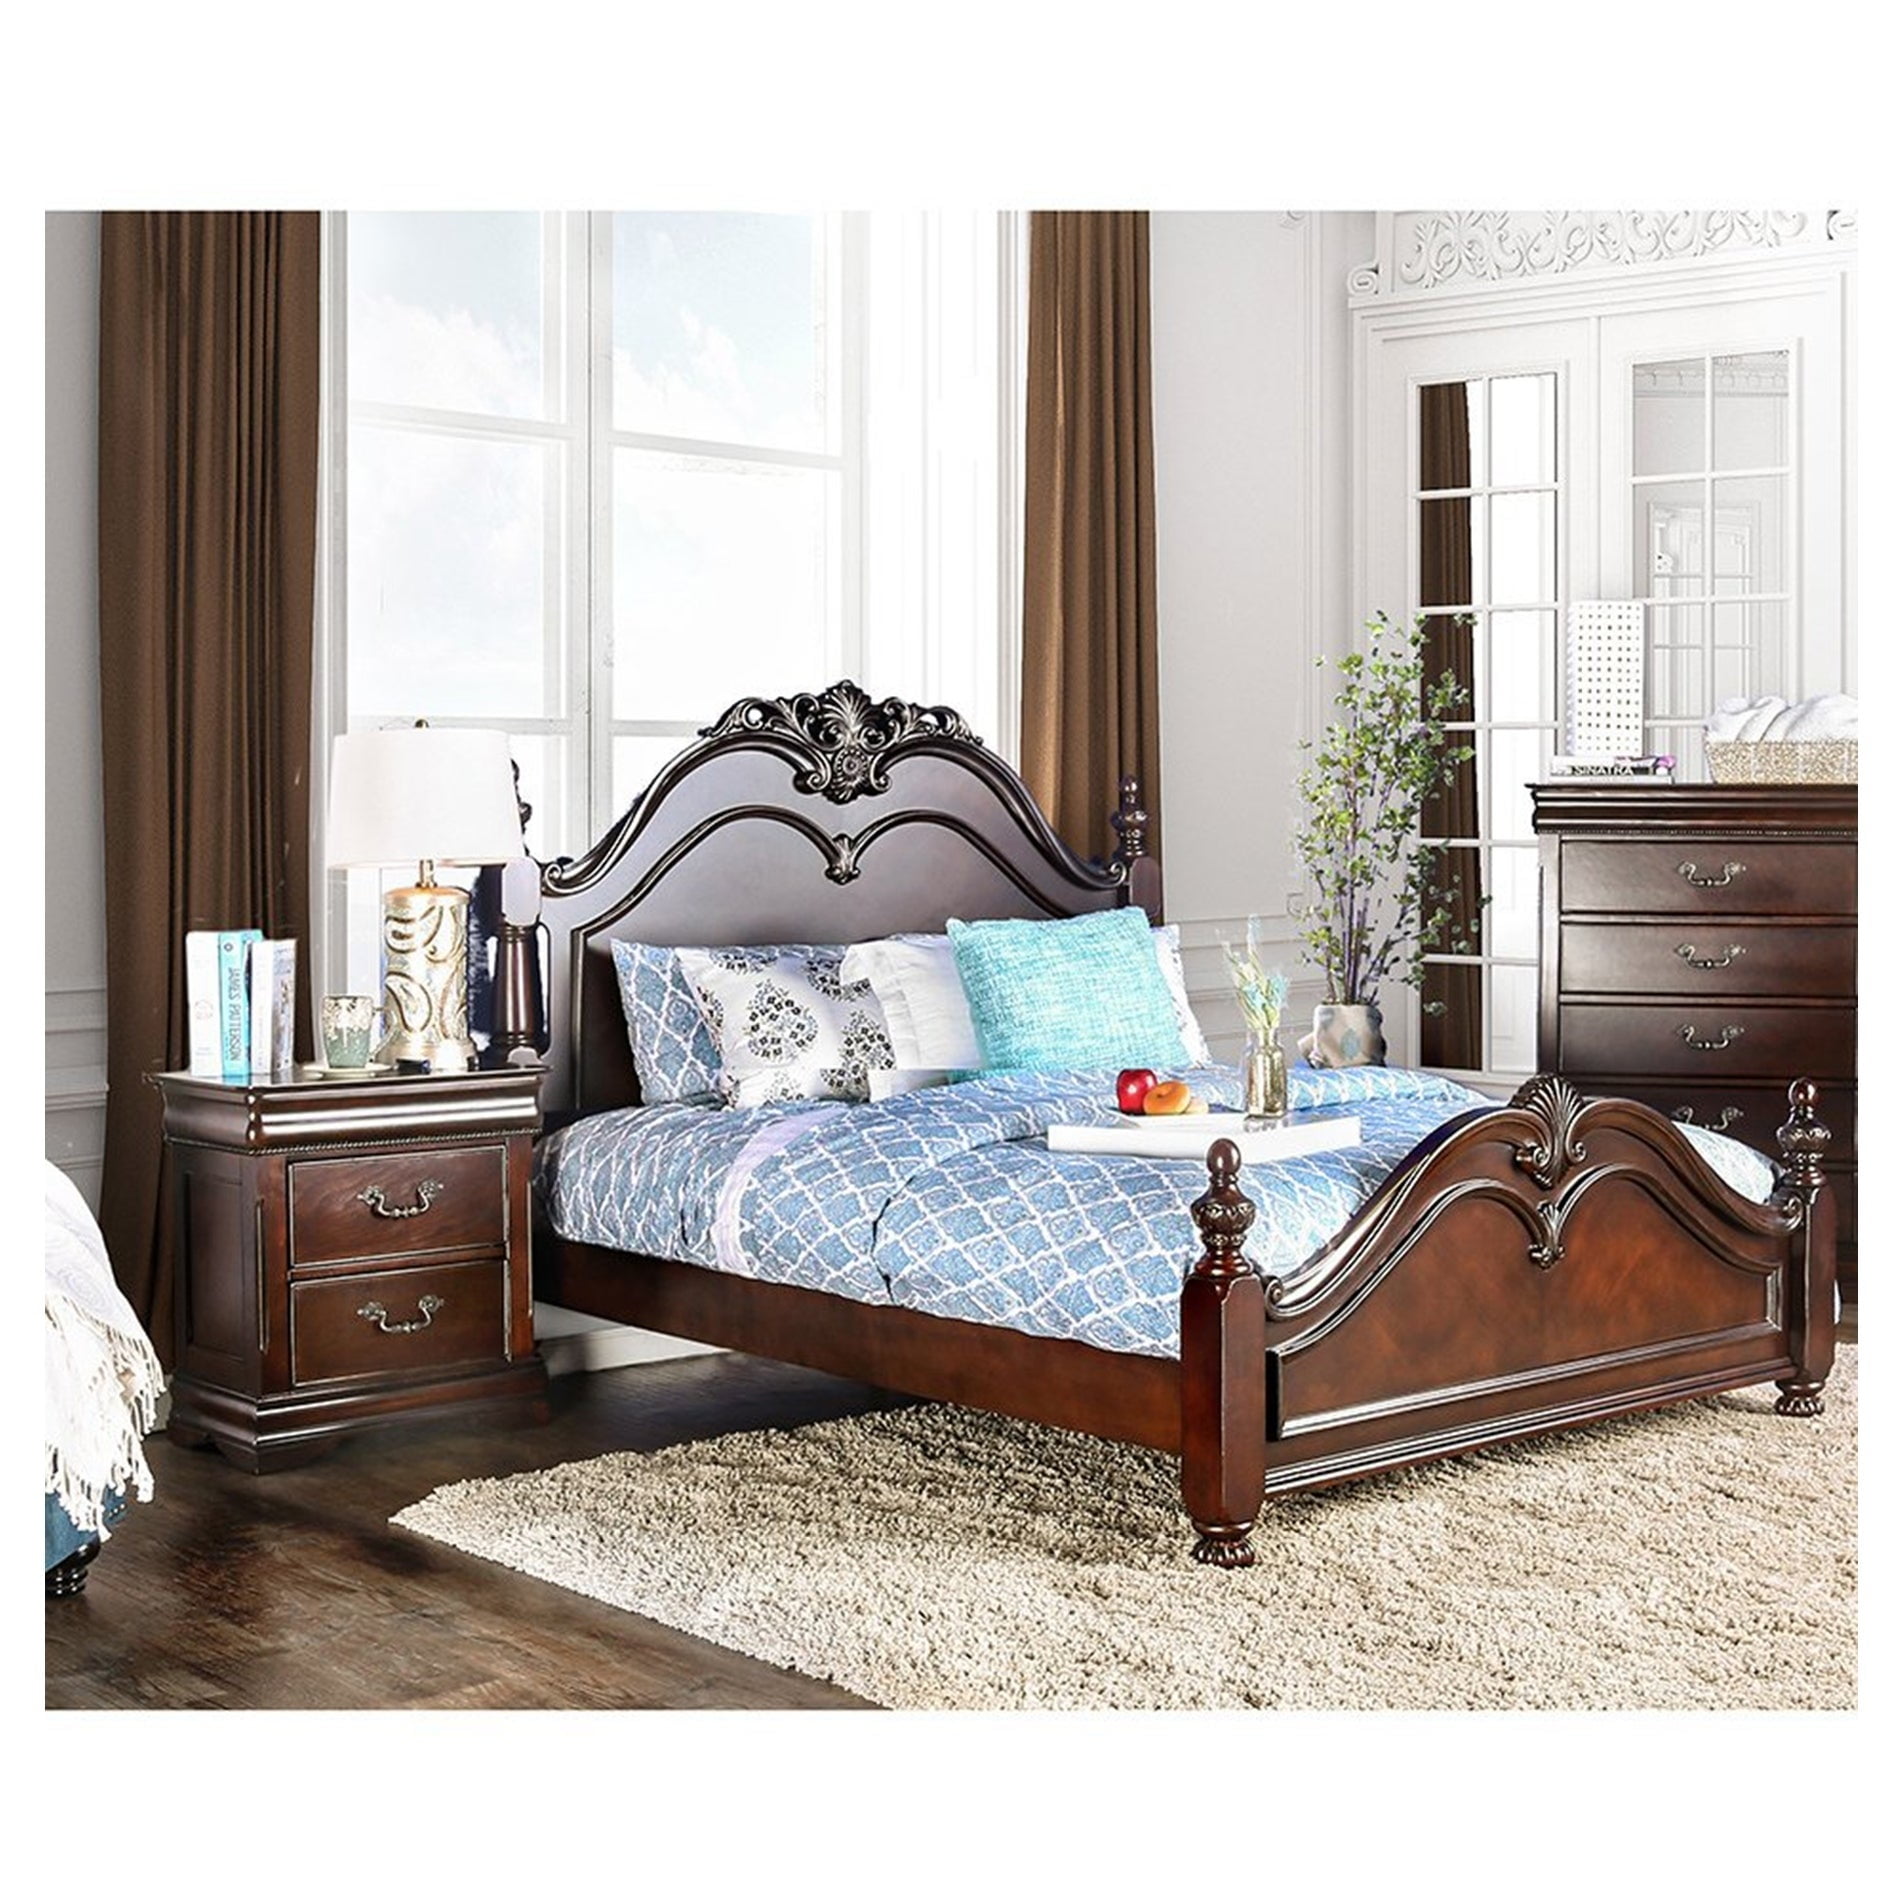 Furniture Of America Diva Traditional Cherry 2 Piece Bedroom Set Walmart Com Walmart Com